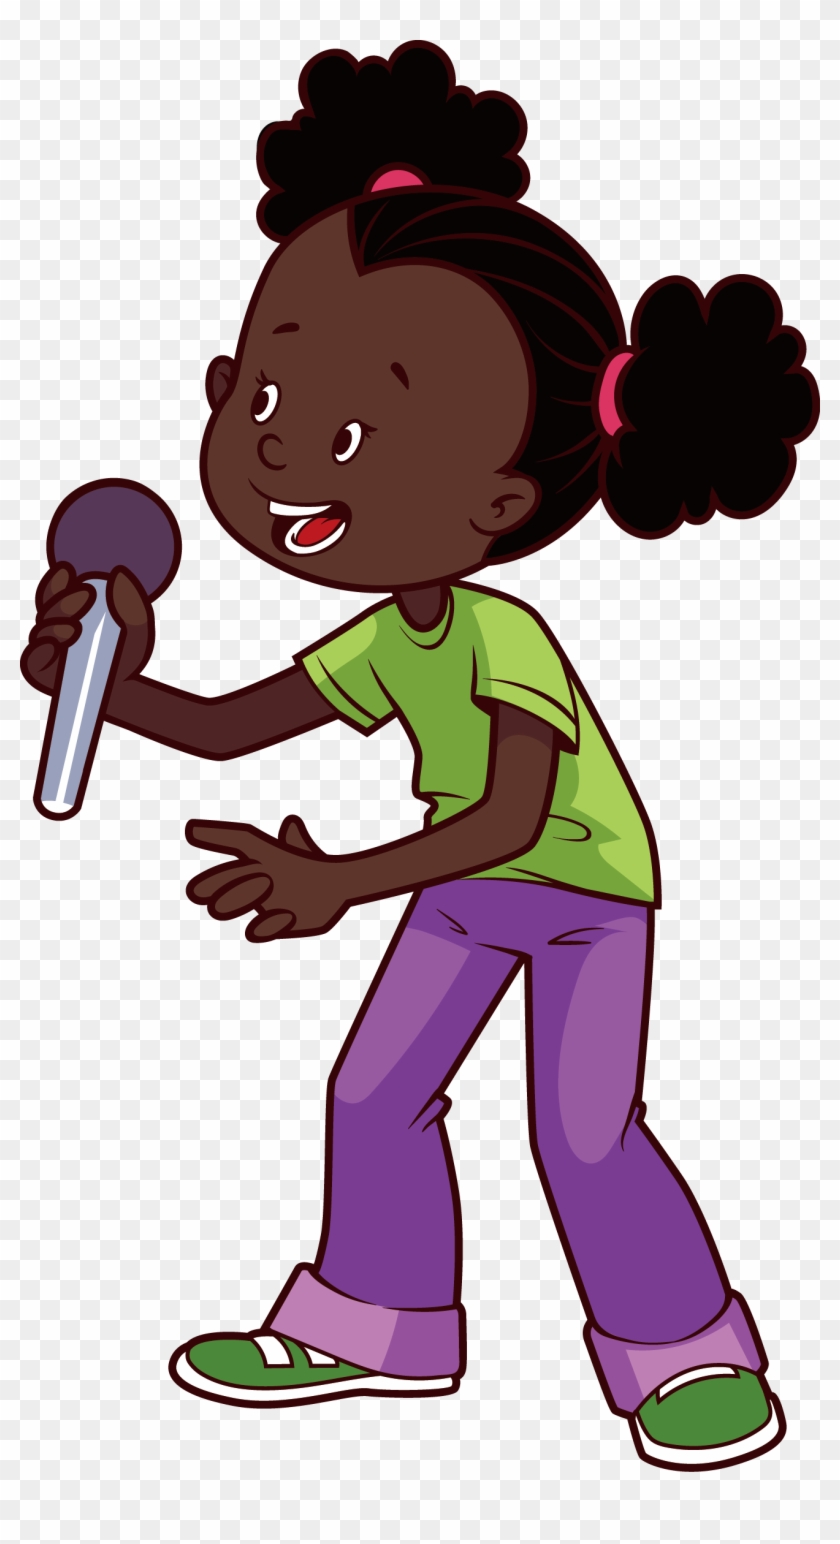 Microphone Singing Cartoon Illustration - Microphone Singing Cartoon Illustration #367882